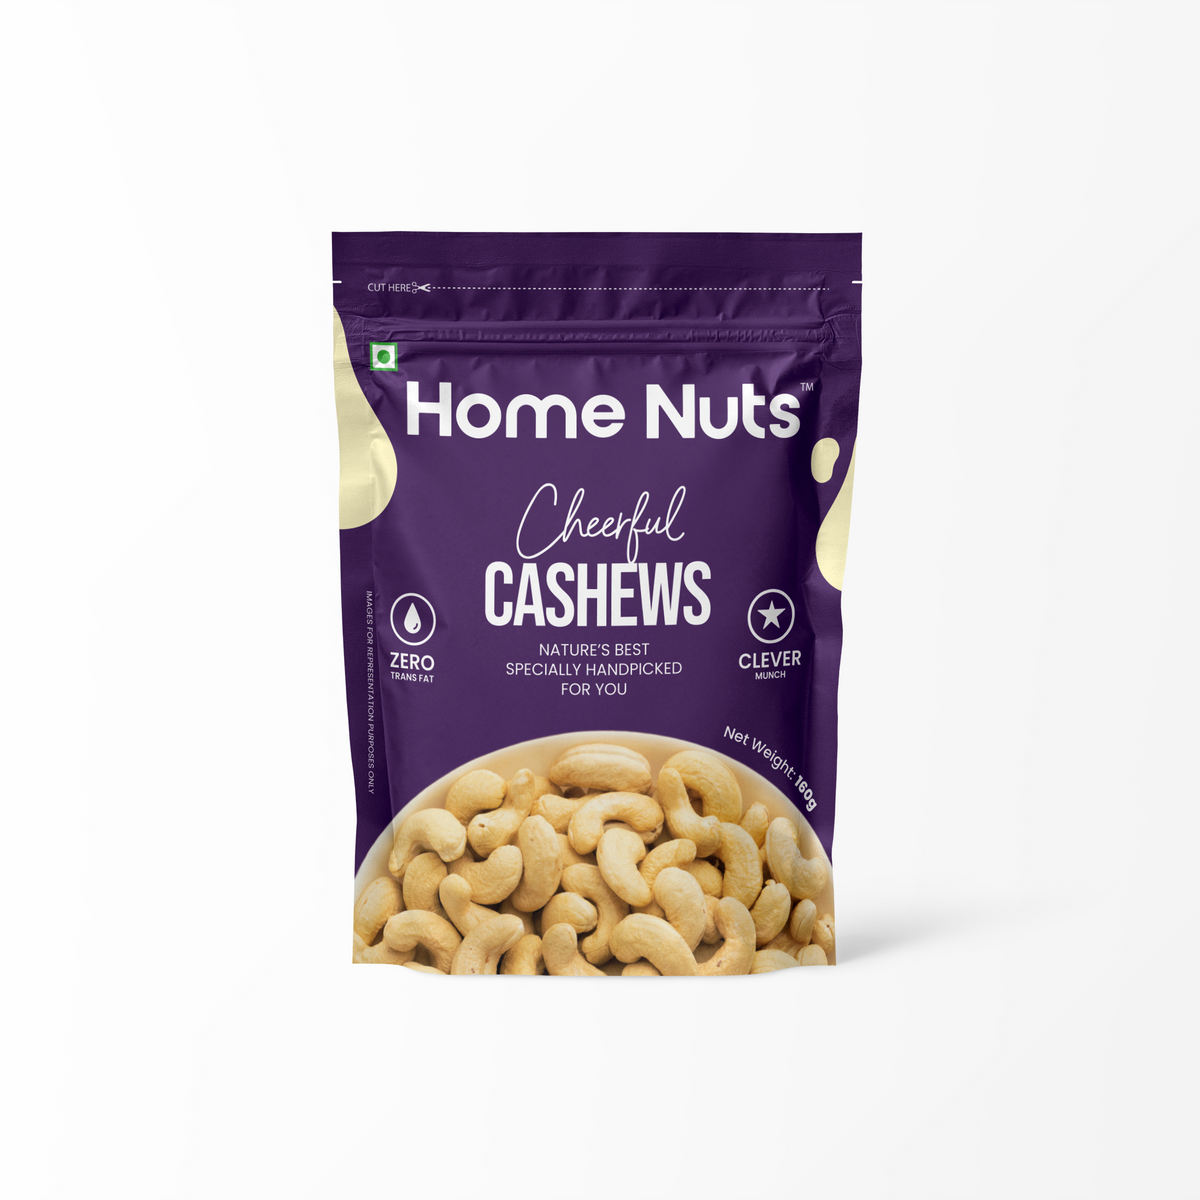 Home Nuts Cheerful Cashews Beautiful